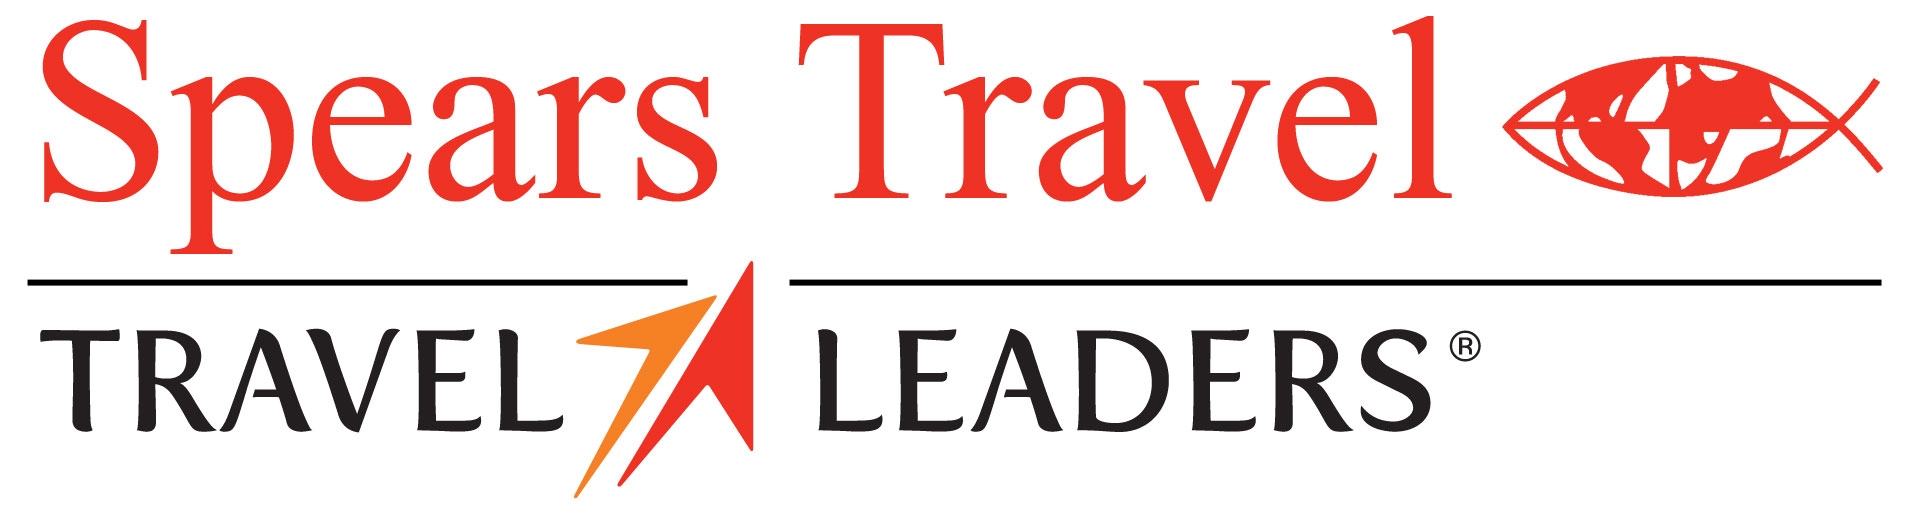 Spears Travel / Travel Leaders